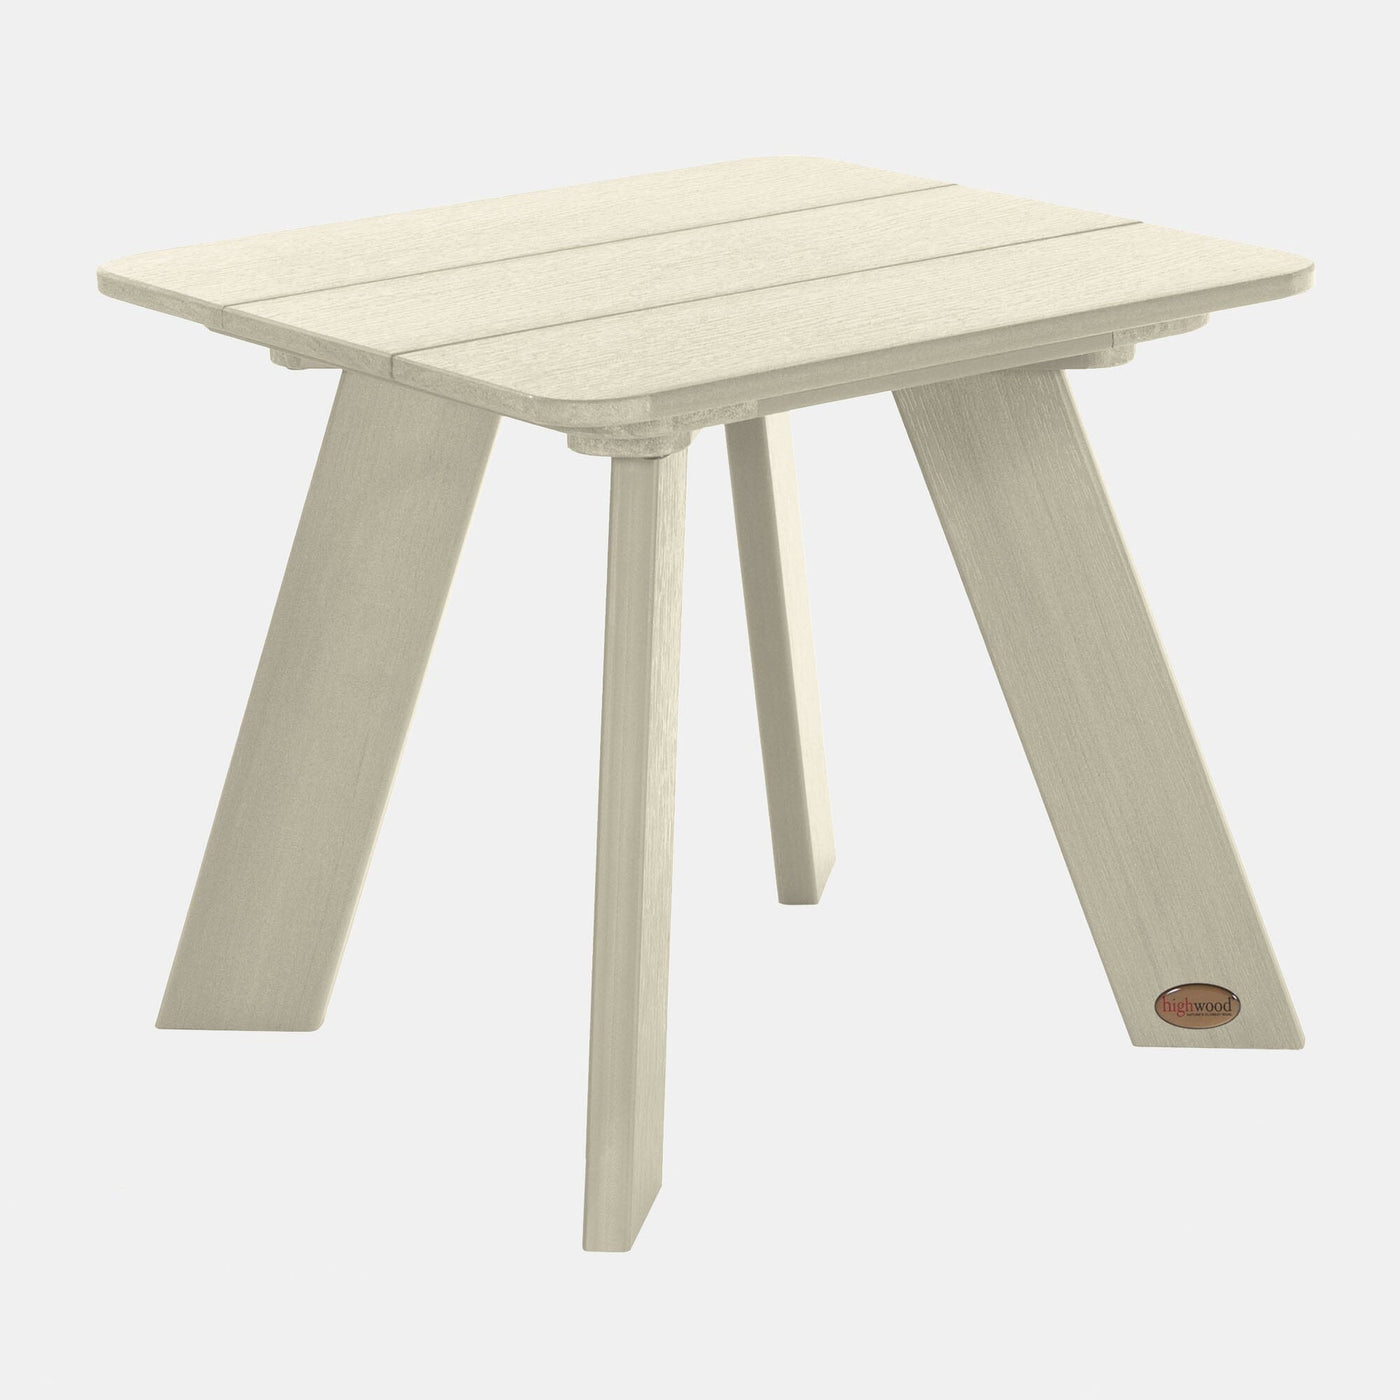 Italica Modern Side table in Whitewash